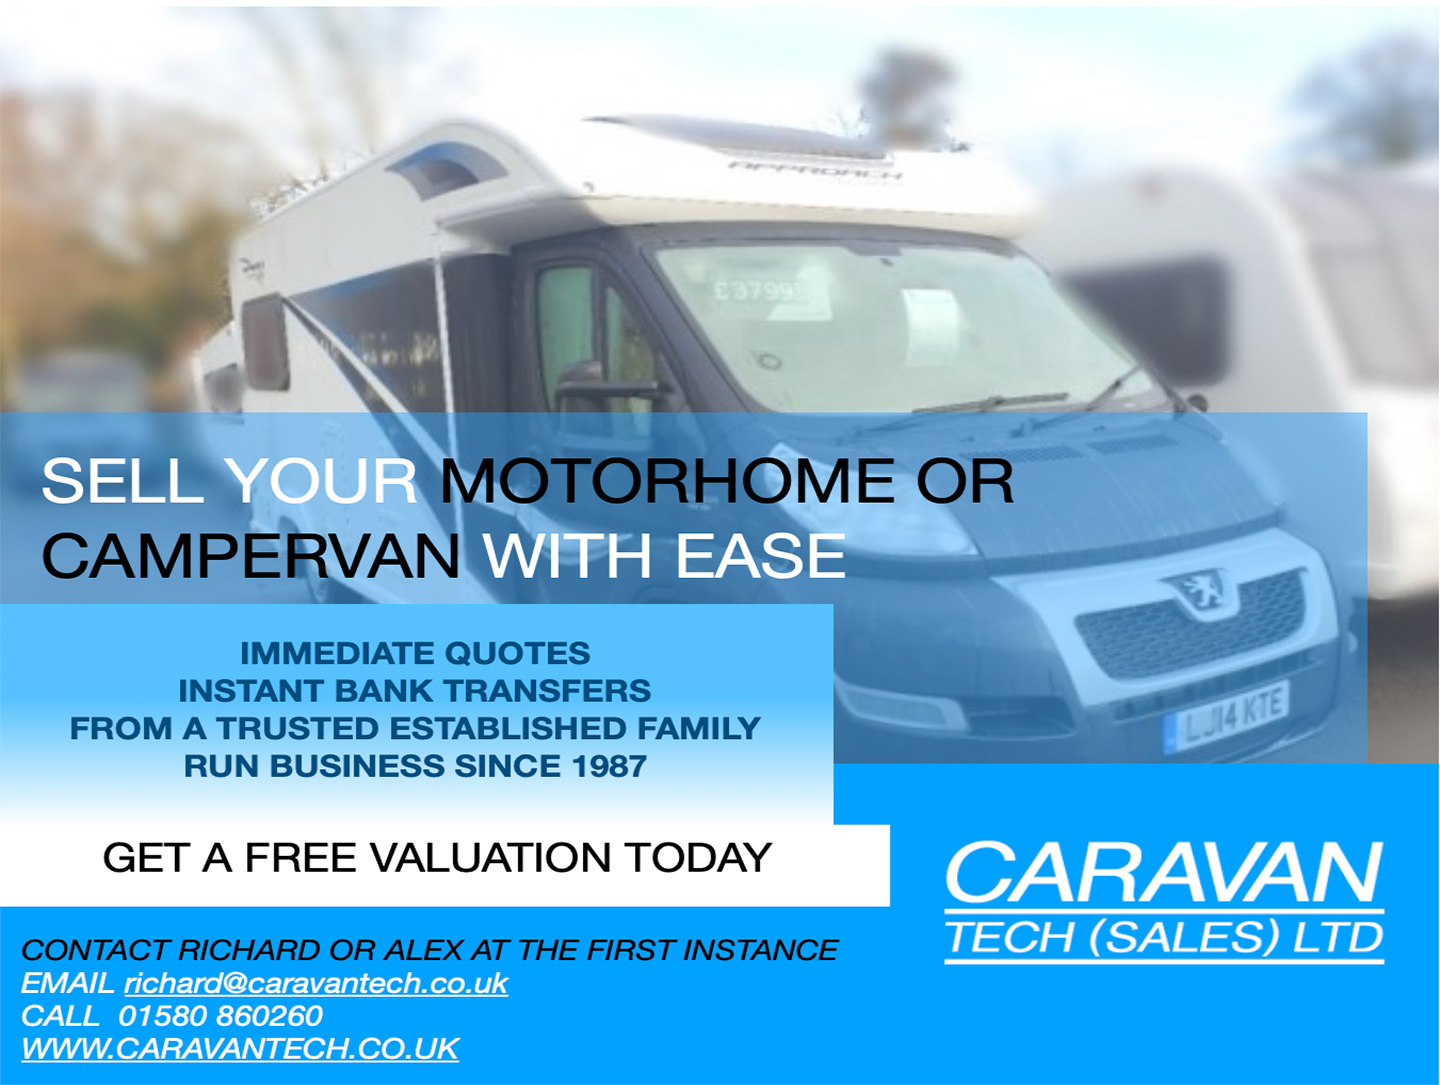 Website advert for Caravan Tech Services